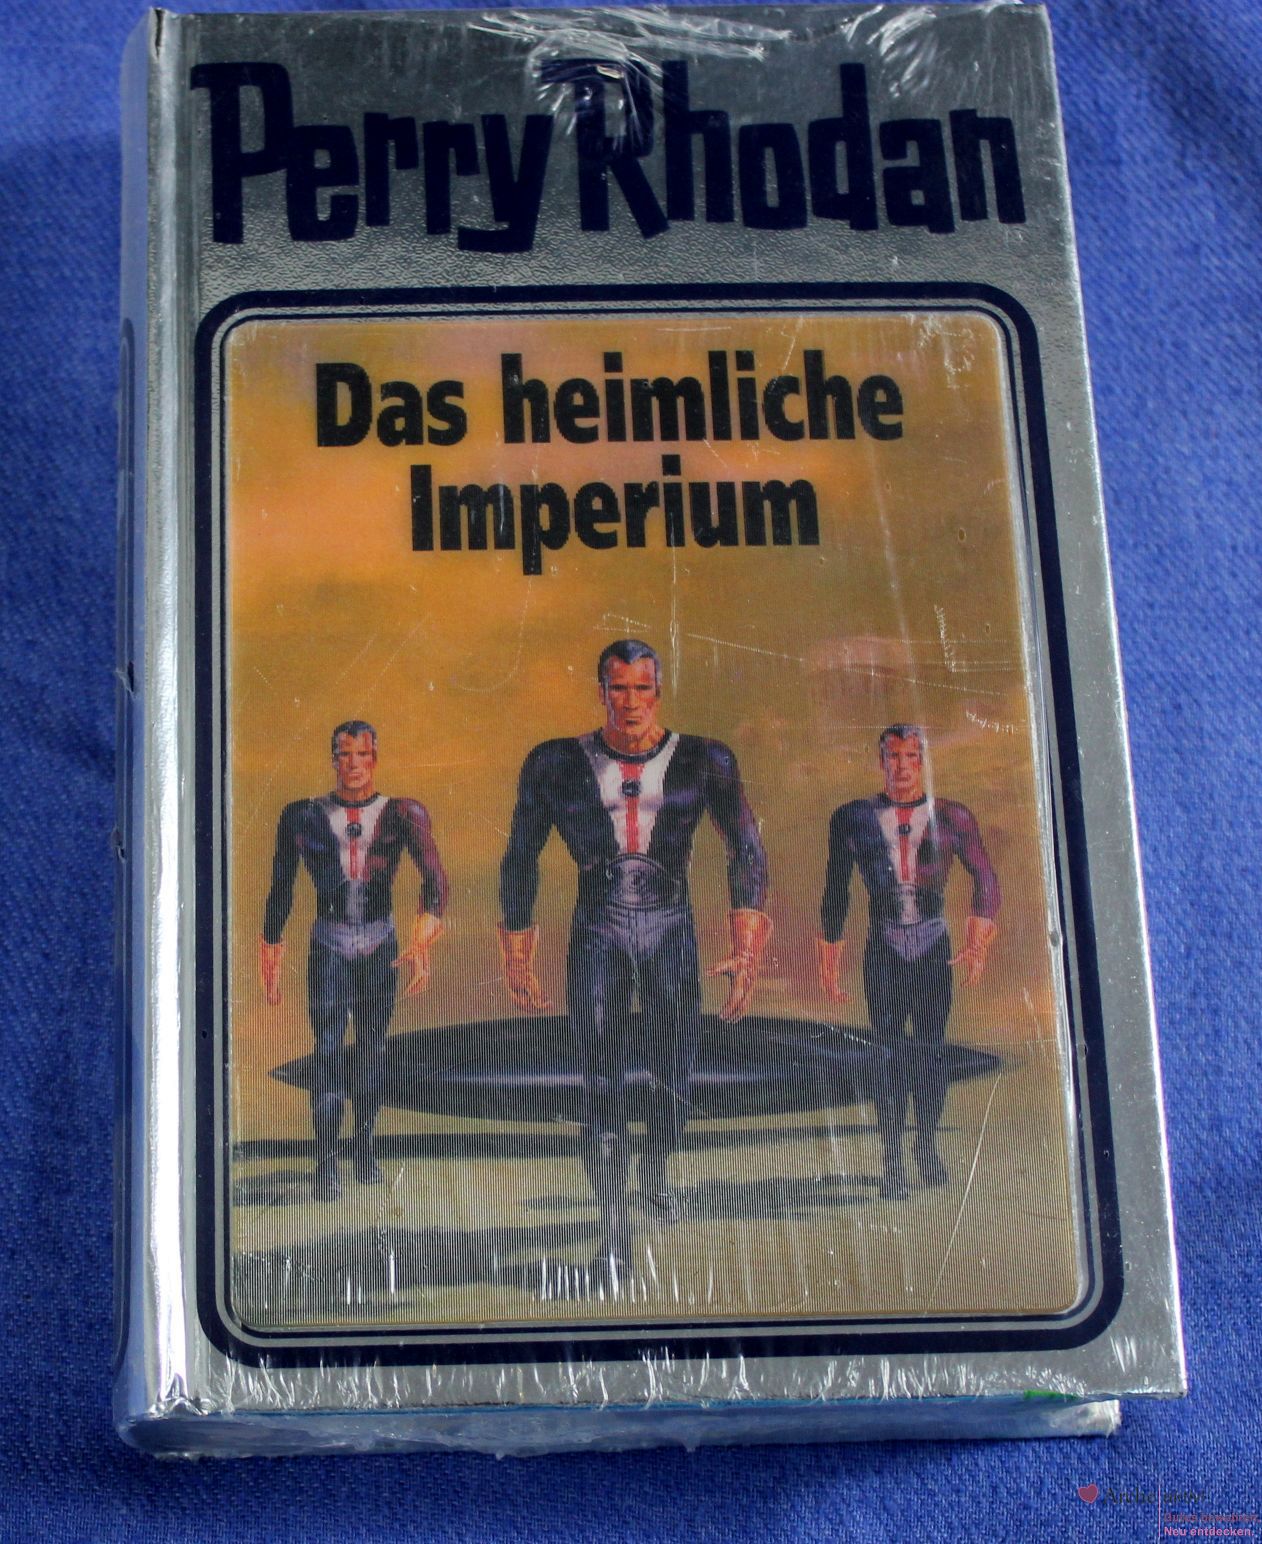 Perry Rhodan Roman "Das heimliche Imperium", Silberband Nr. 57 m. Hologramm - neu, OVP 